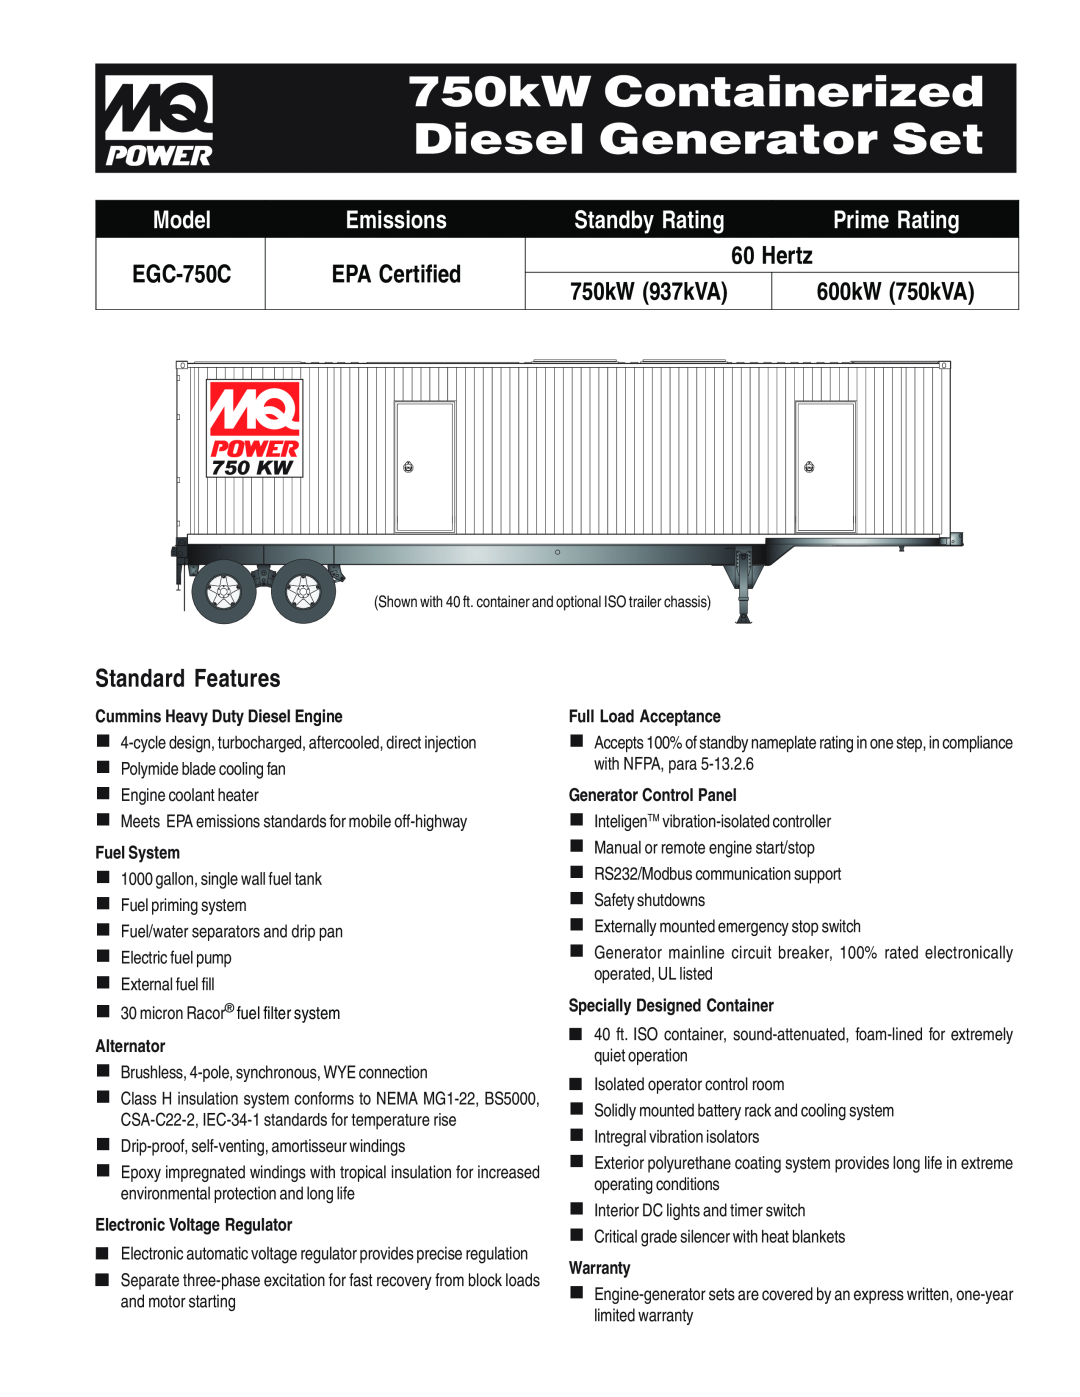 Multiquip EGC-750C warranty 750kW Containerized Diesel Generator Set, Hertz, Standard Features, Model, Emissions, 750 KW 